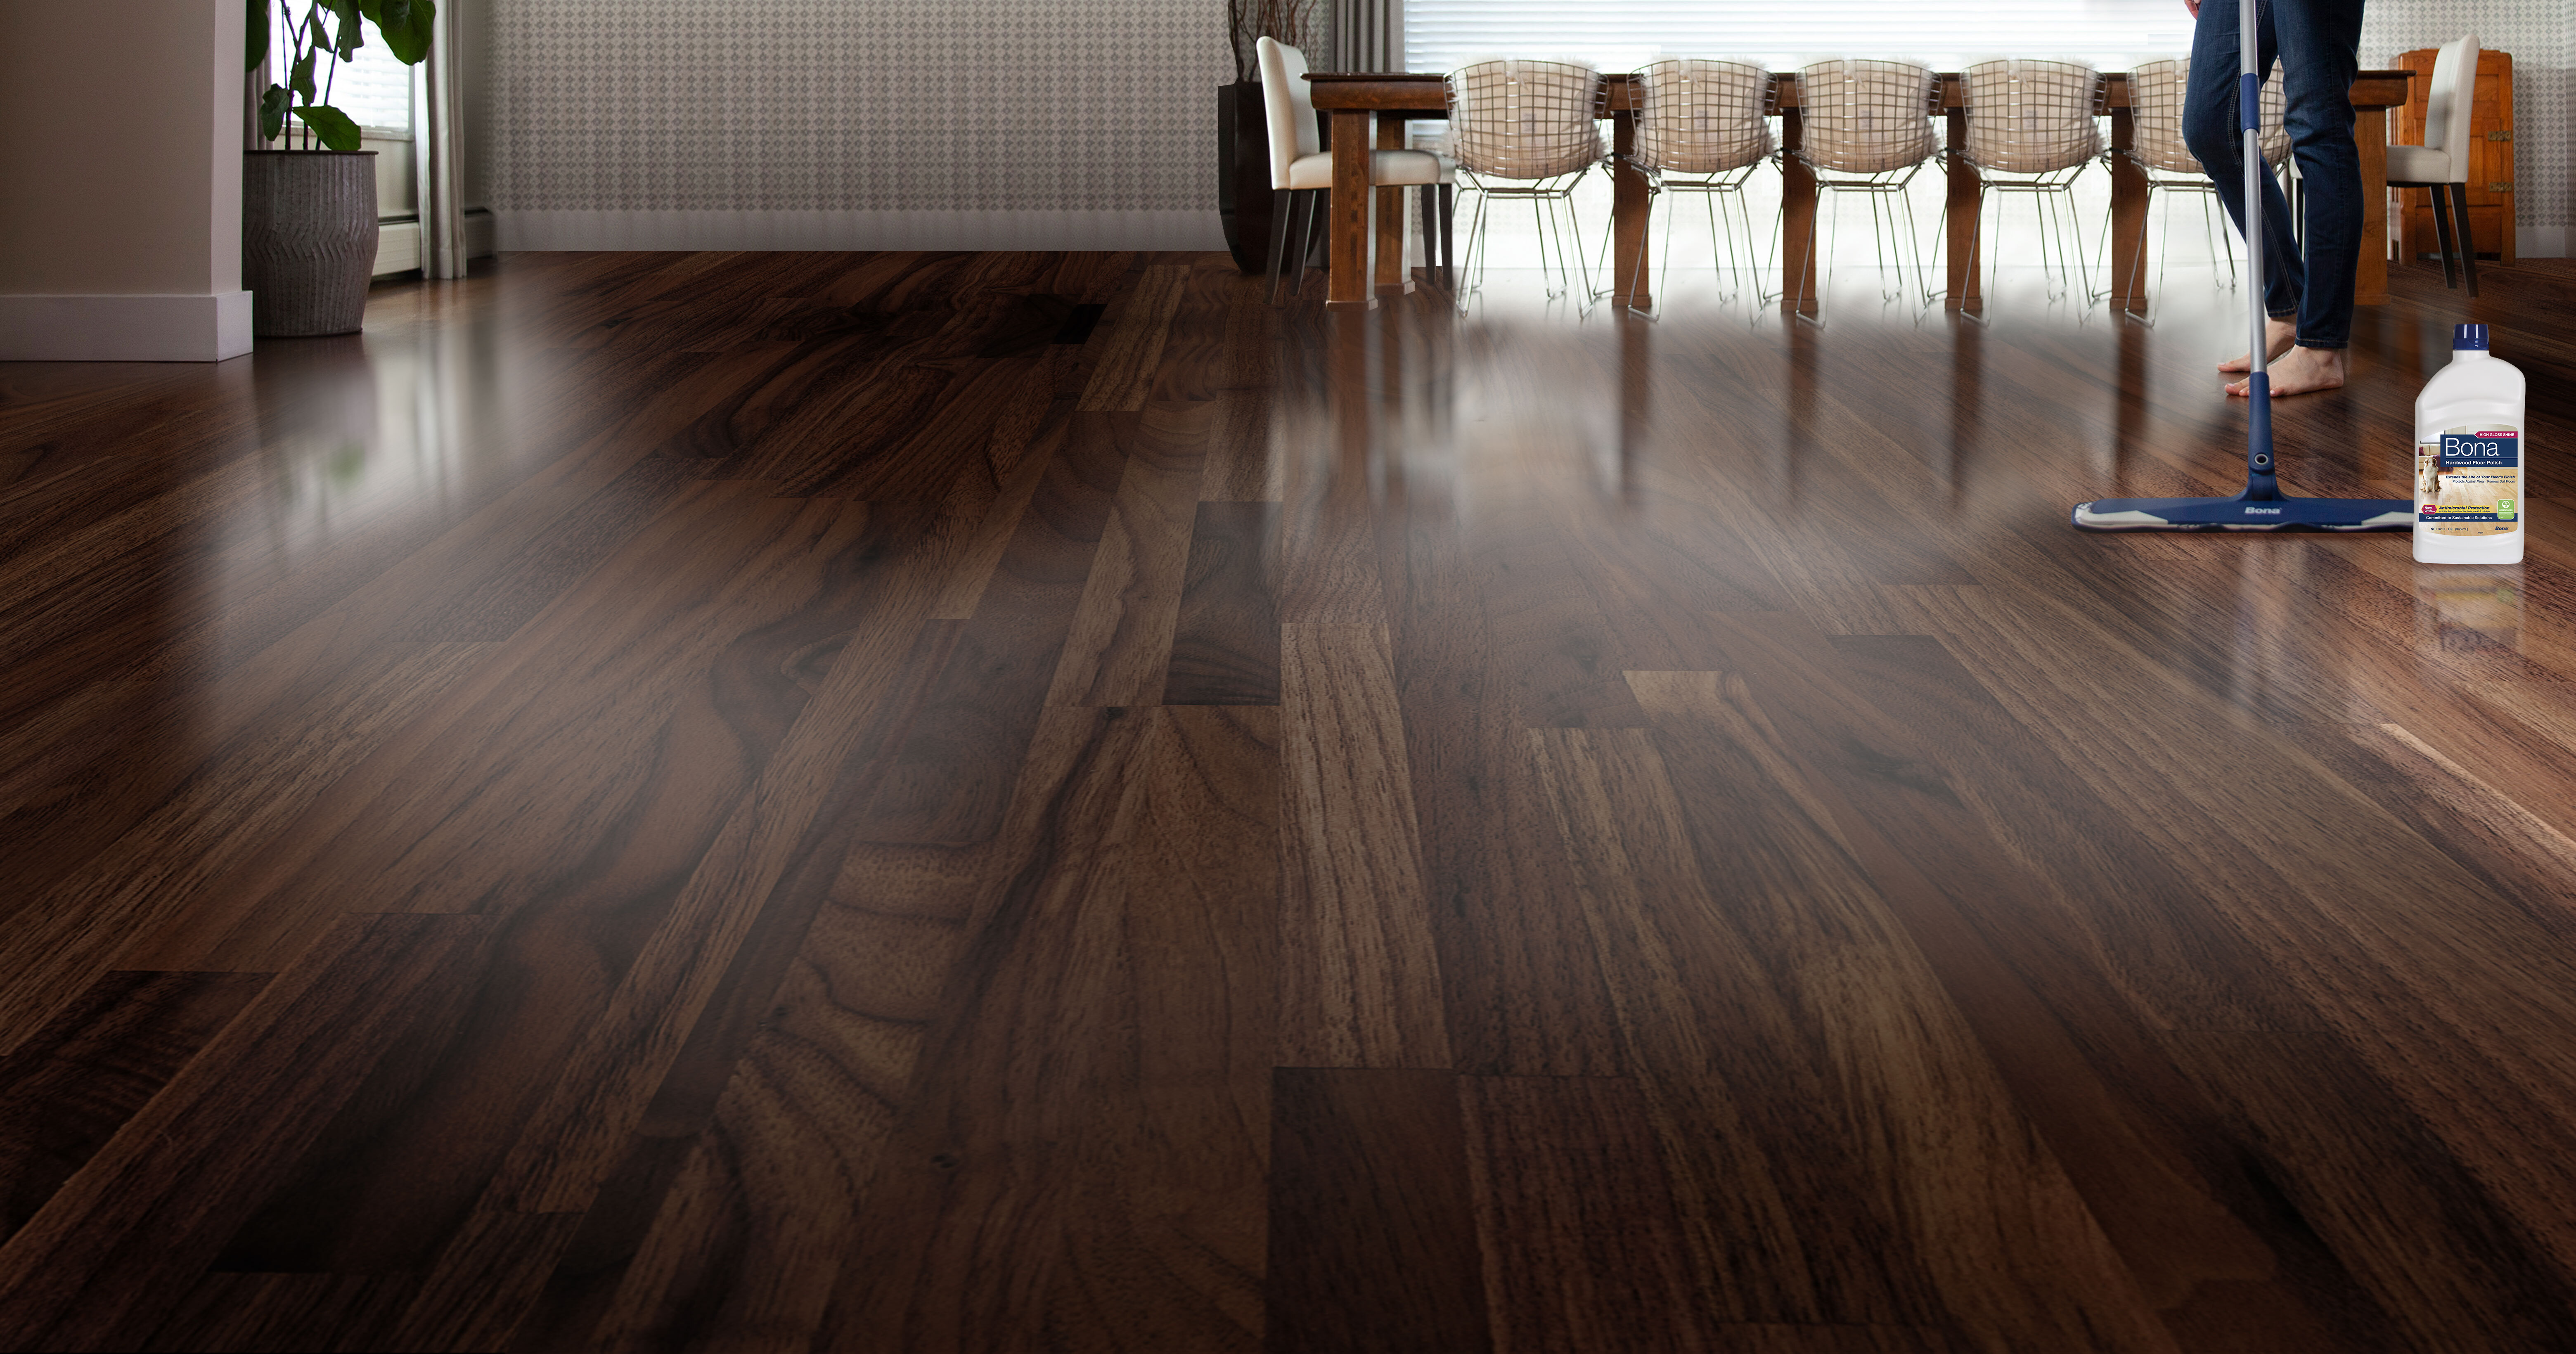 How To Polish Hardwood Floors Do S And, How To Clean And Shine Hardwood Floors